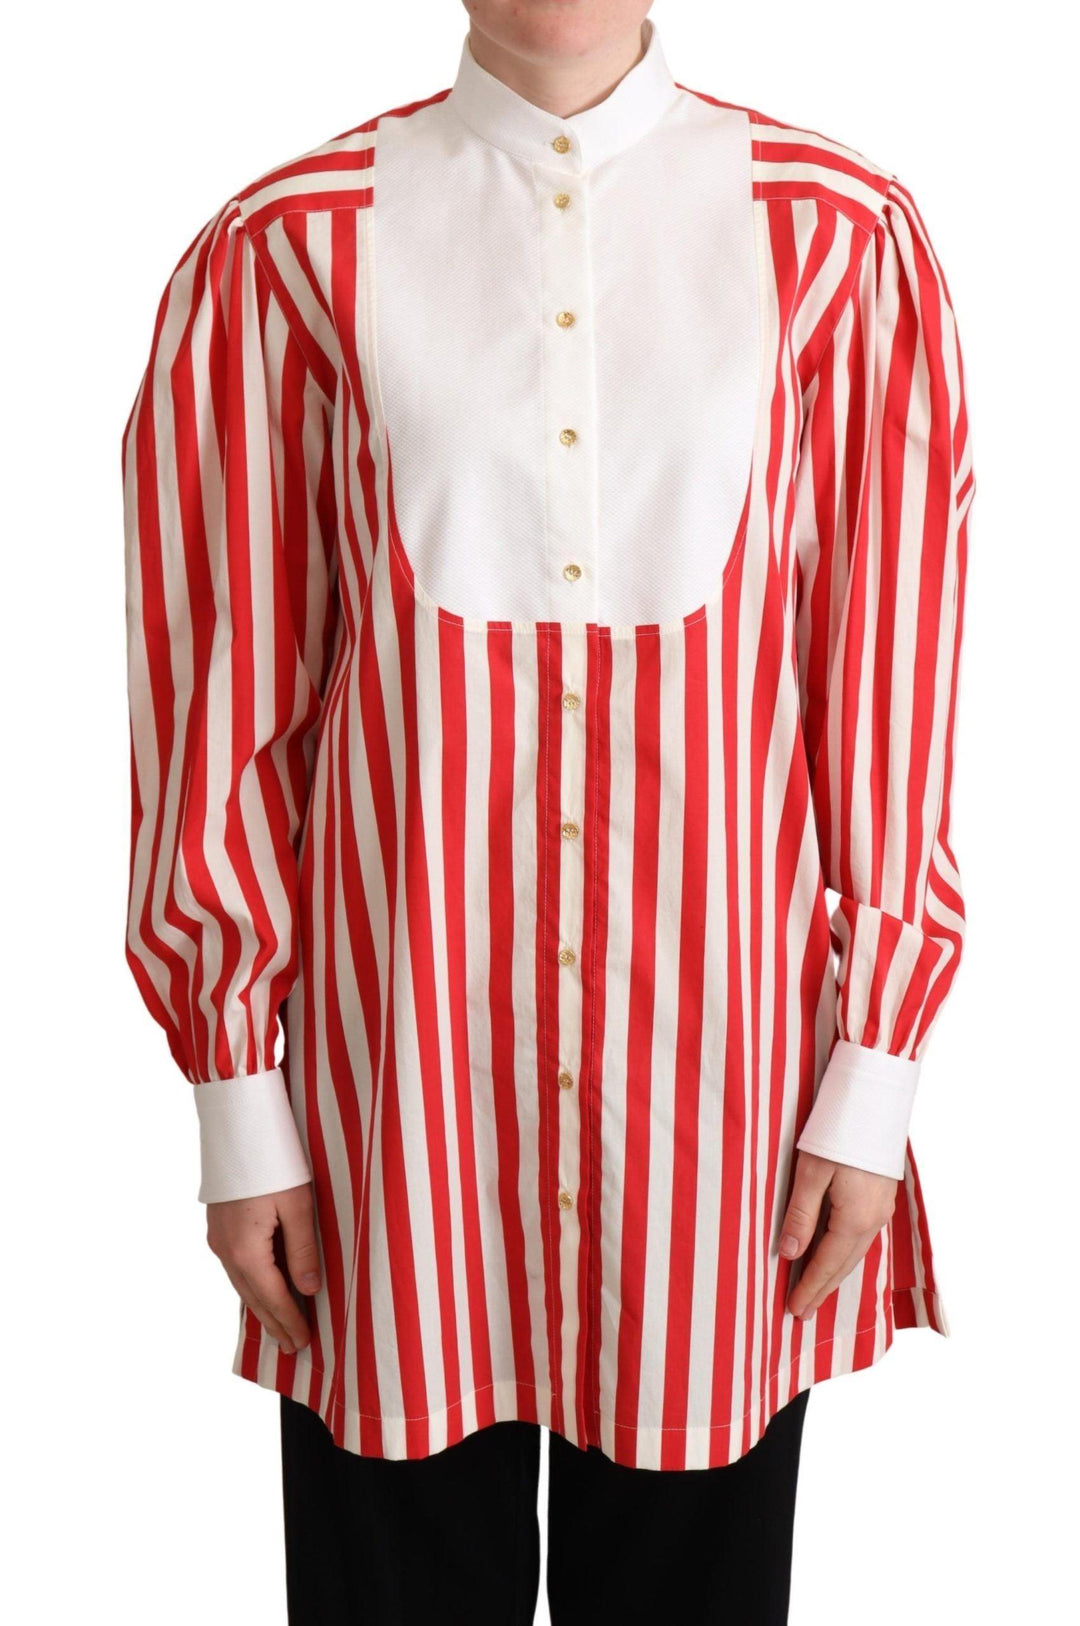 Dolce & Gabbana Red White Striped Long Sleeves Formal Shirt - Ellie Belle